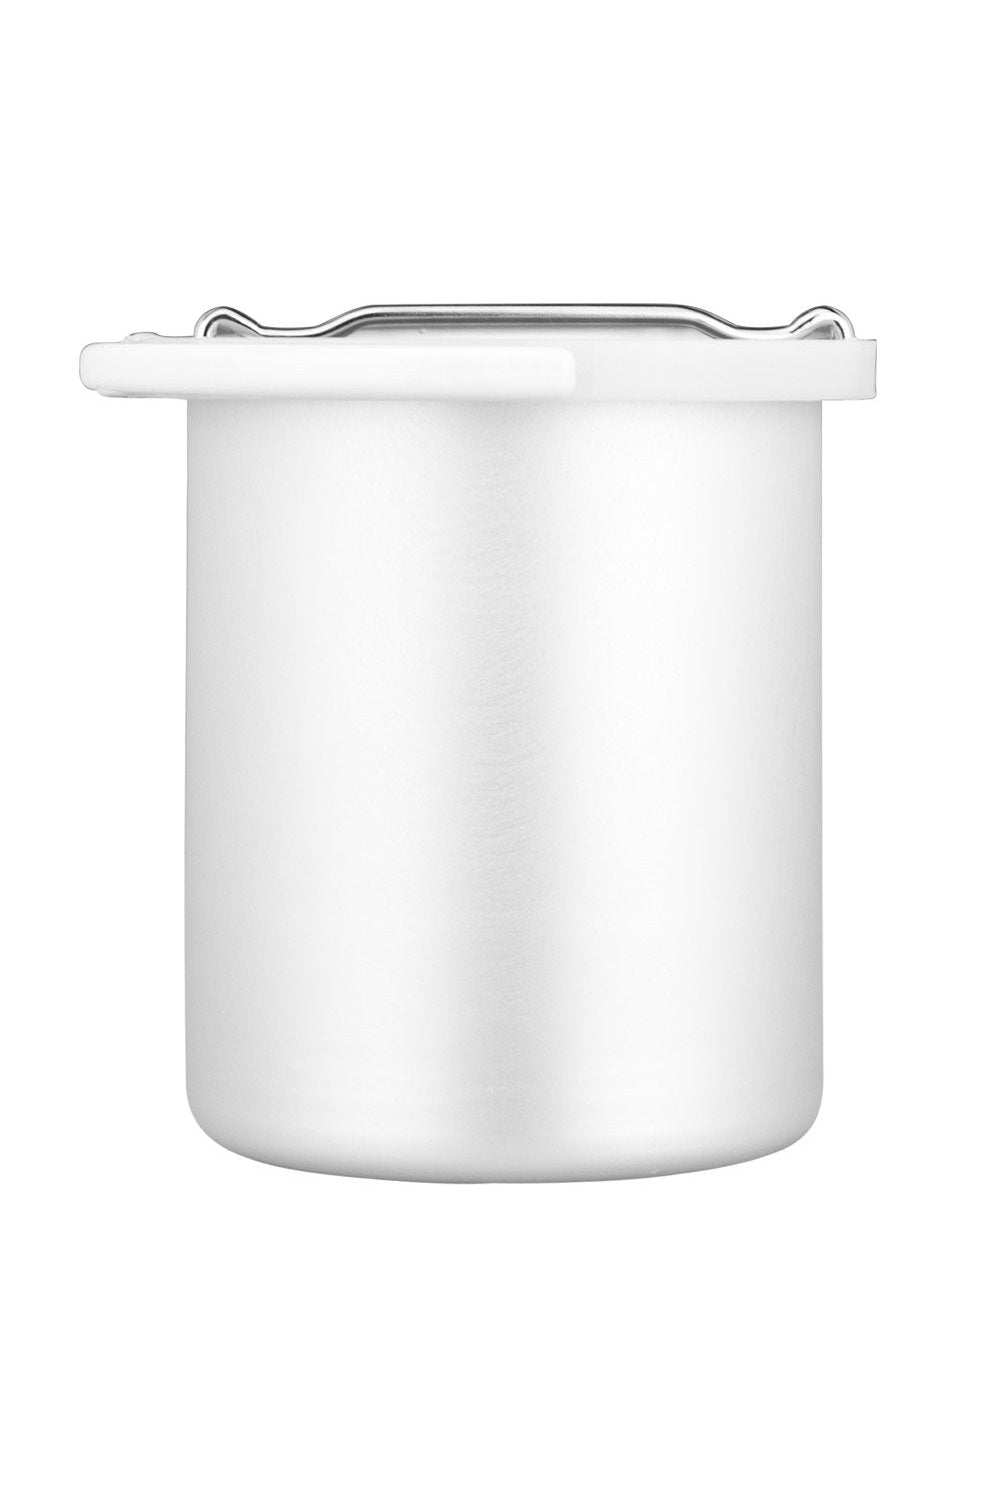 BeautyPRO® Wax Pot Wax Heater Insert (Large) 1L